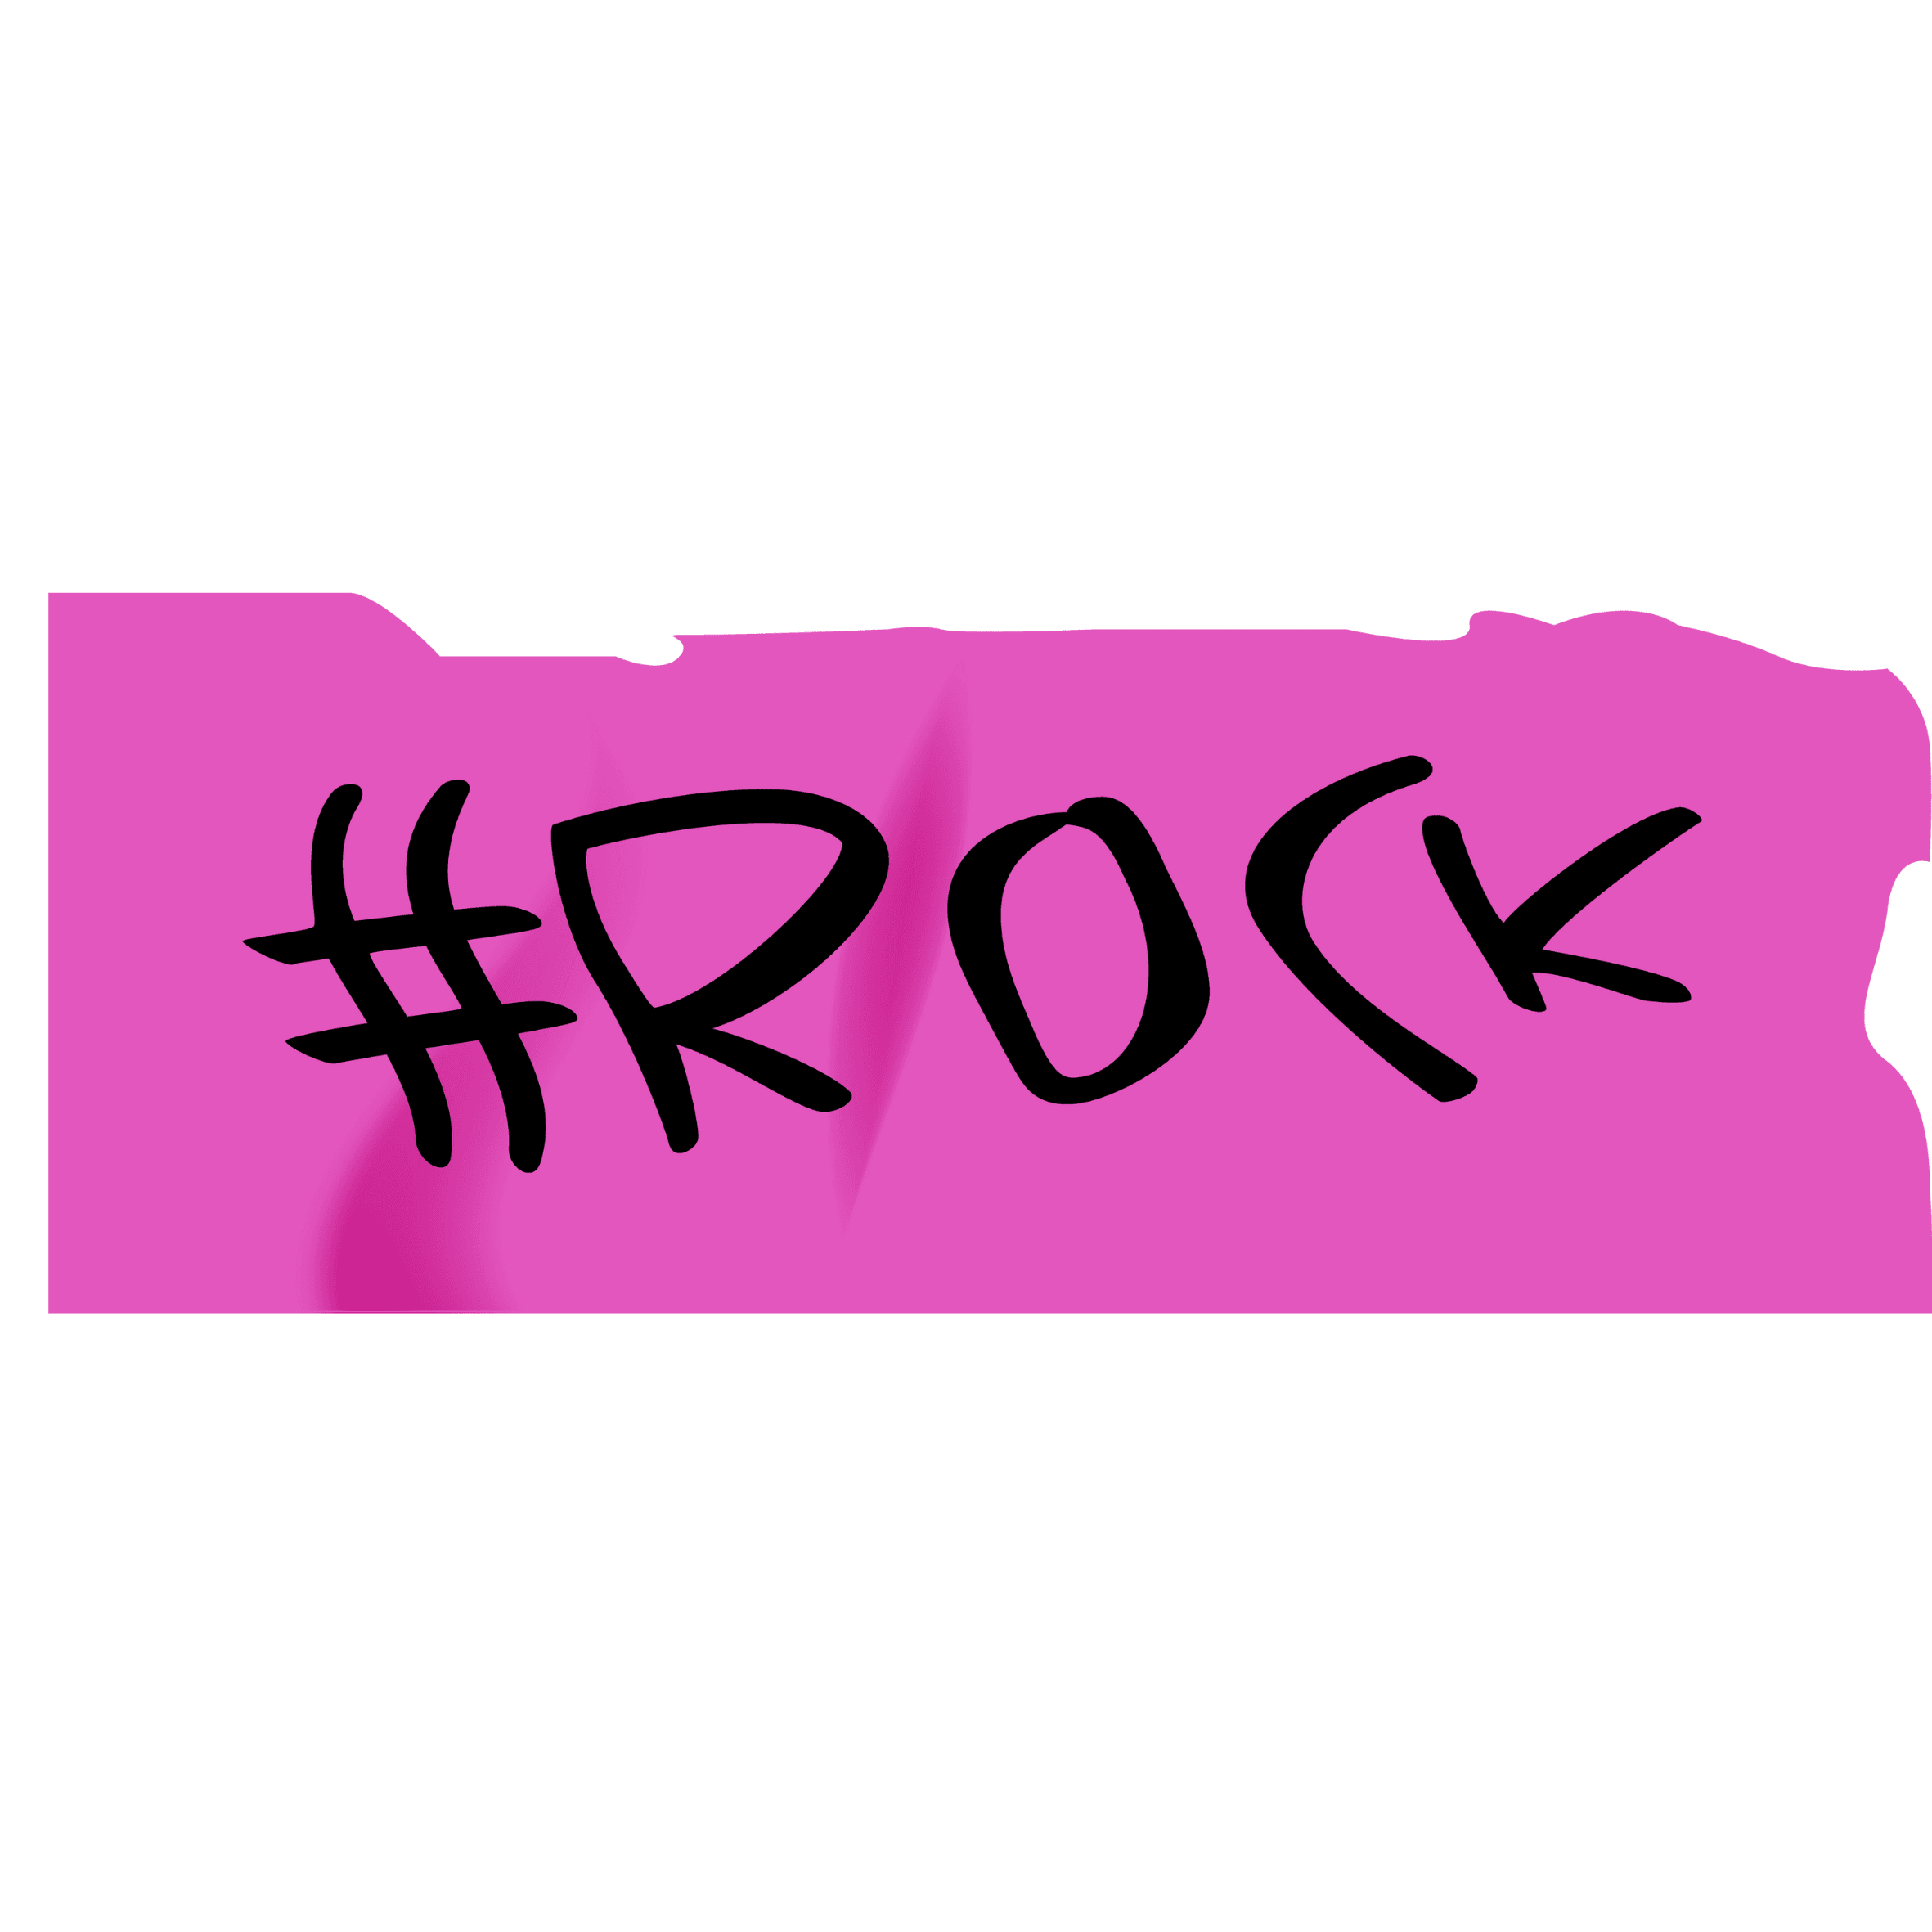 Rock Şeffaf sticker 6 cm